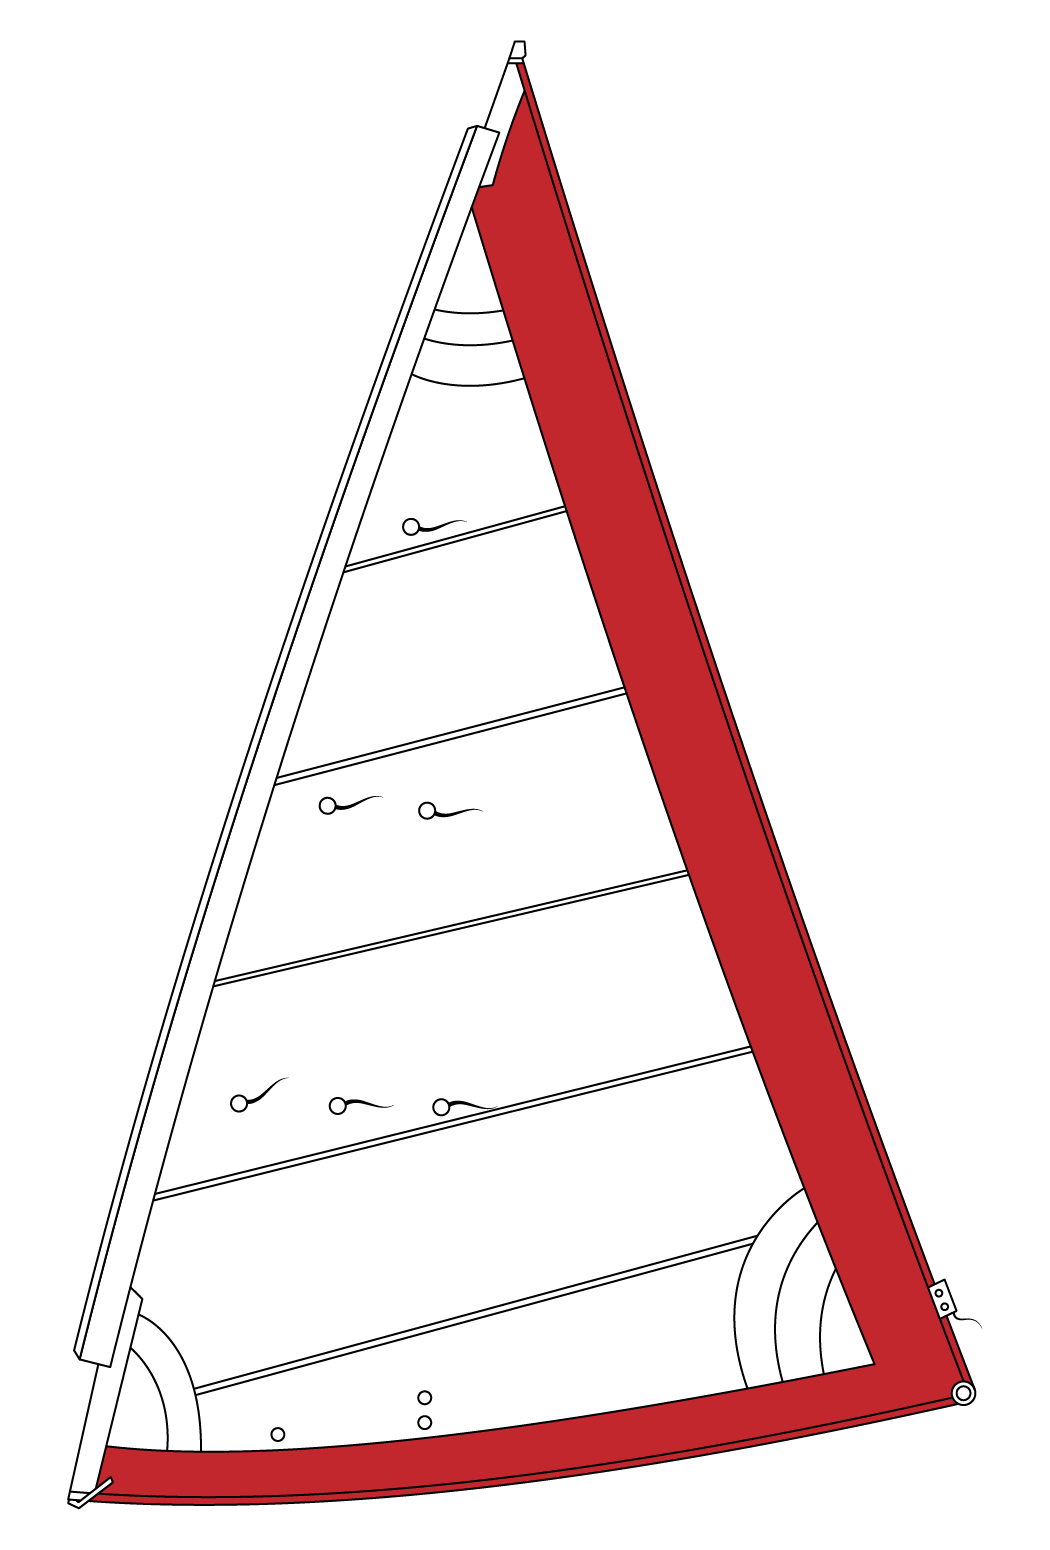 yacht sail makers uk